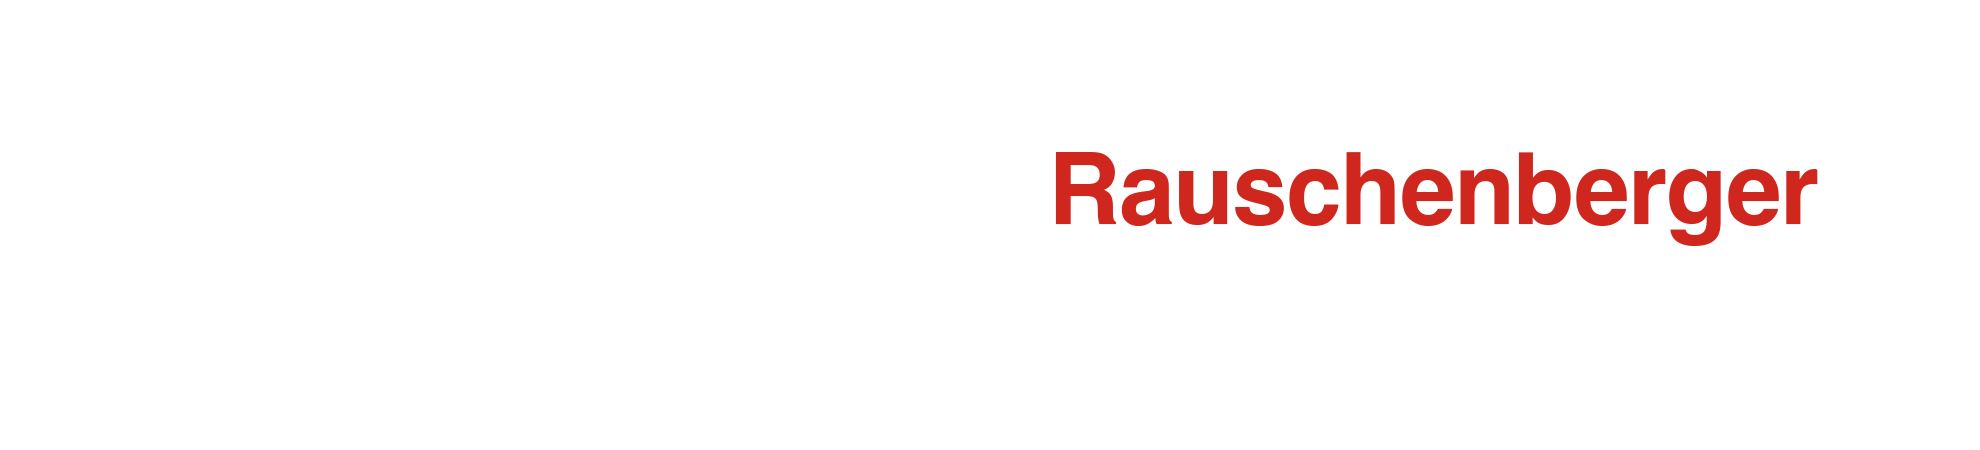 Rauschenberger Logo